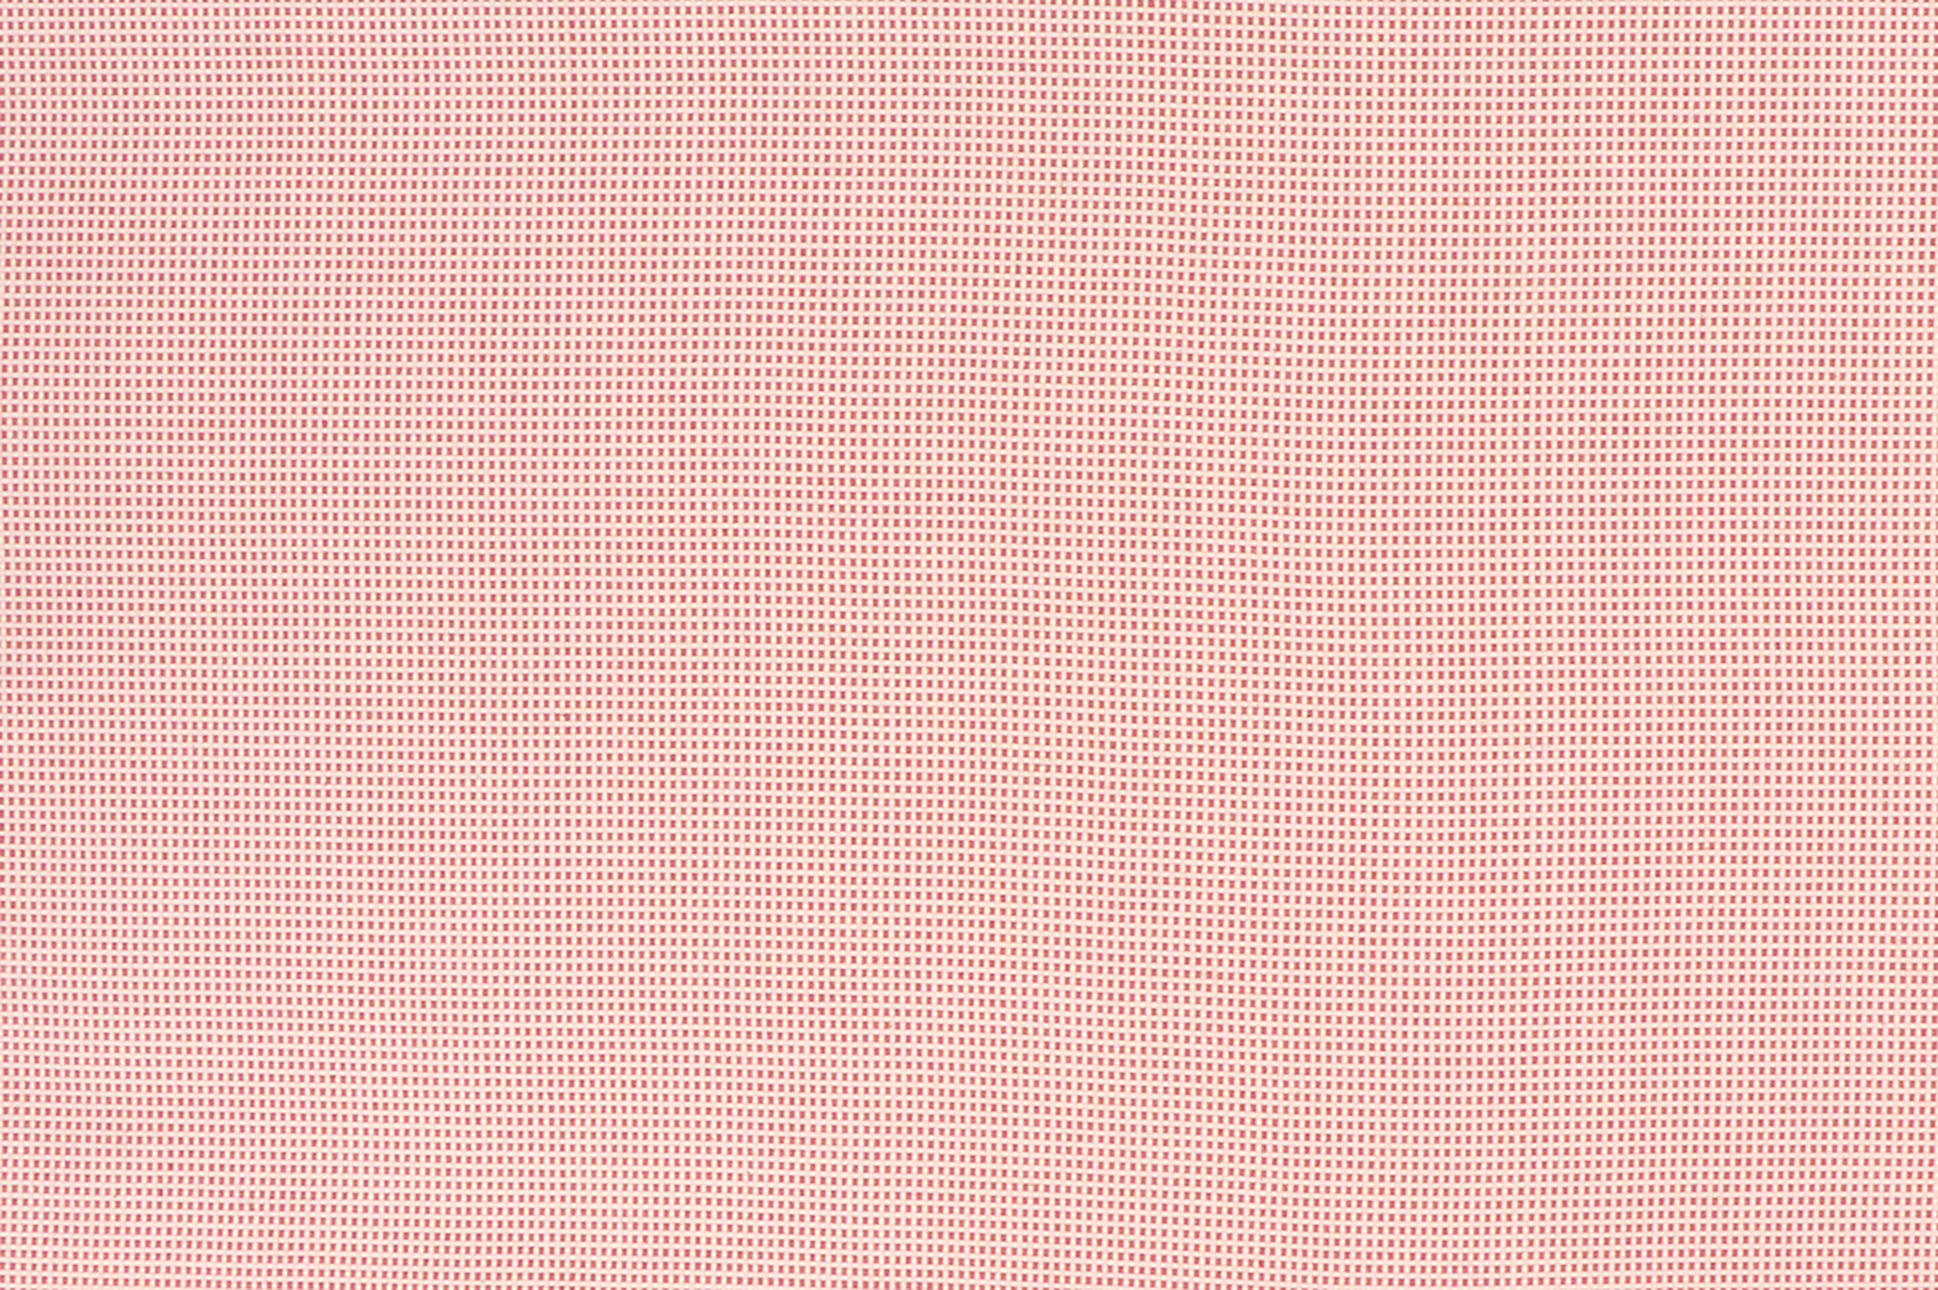 Canvas, weiß/rosa/altrosa gewebt